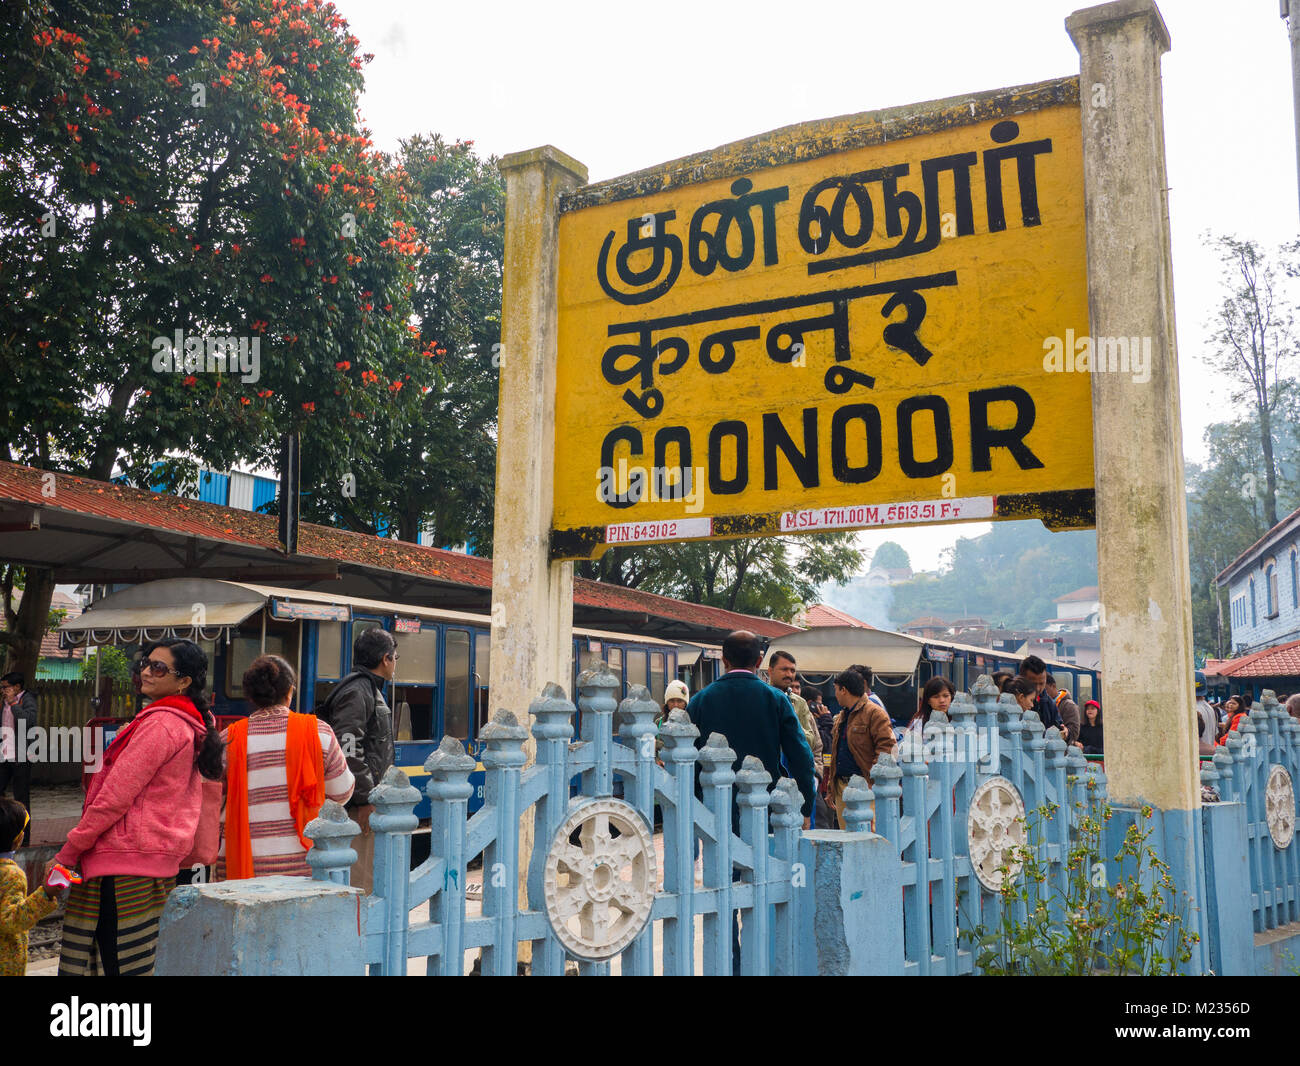 COONOOR, TAMIL NADU, INDIA, 01/08/2018. : Nilgiri mountain railway. Blue train. People waiting for the train. The train station of Coonoor. Stock Photo